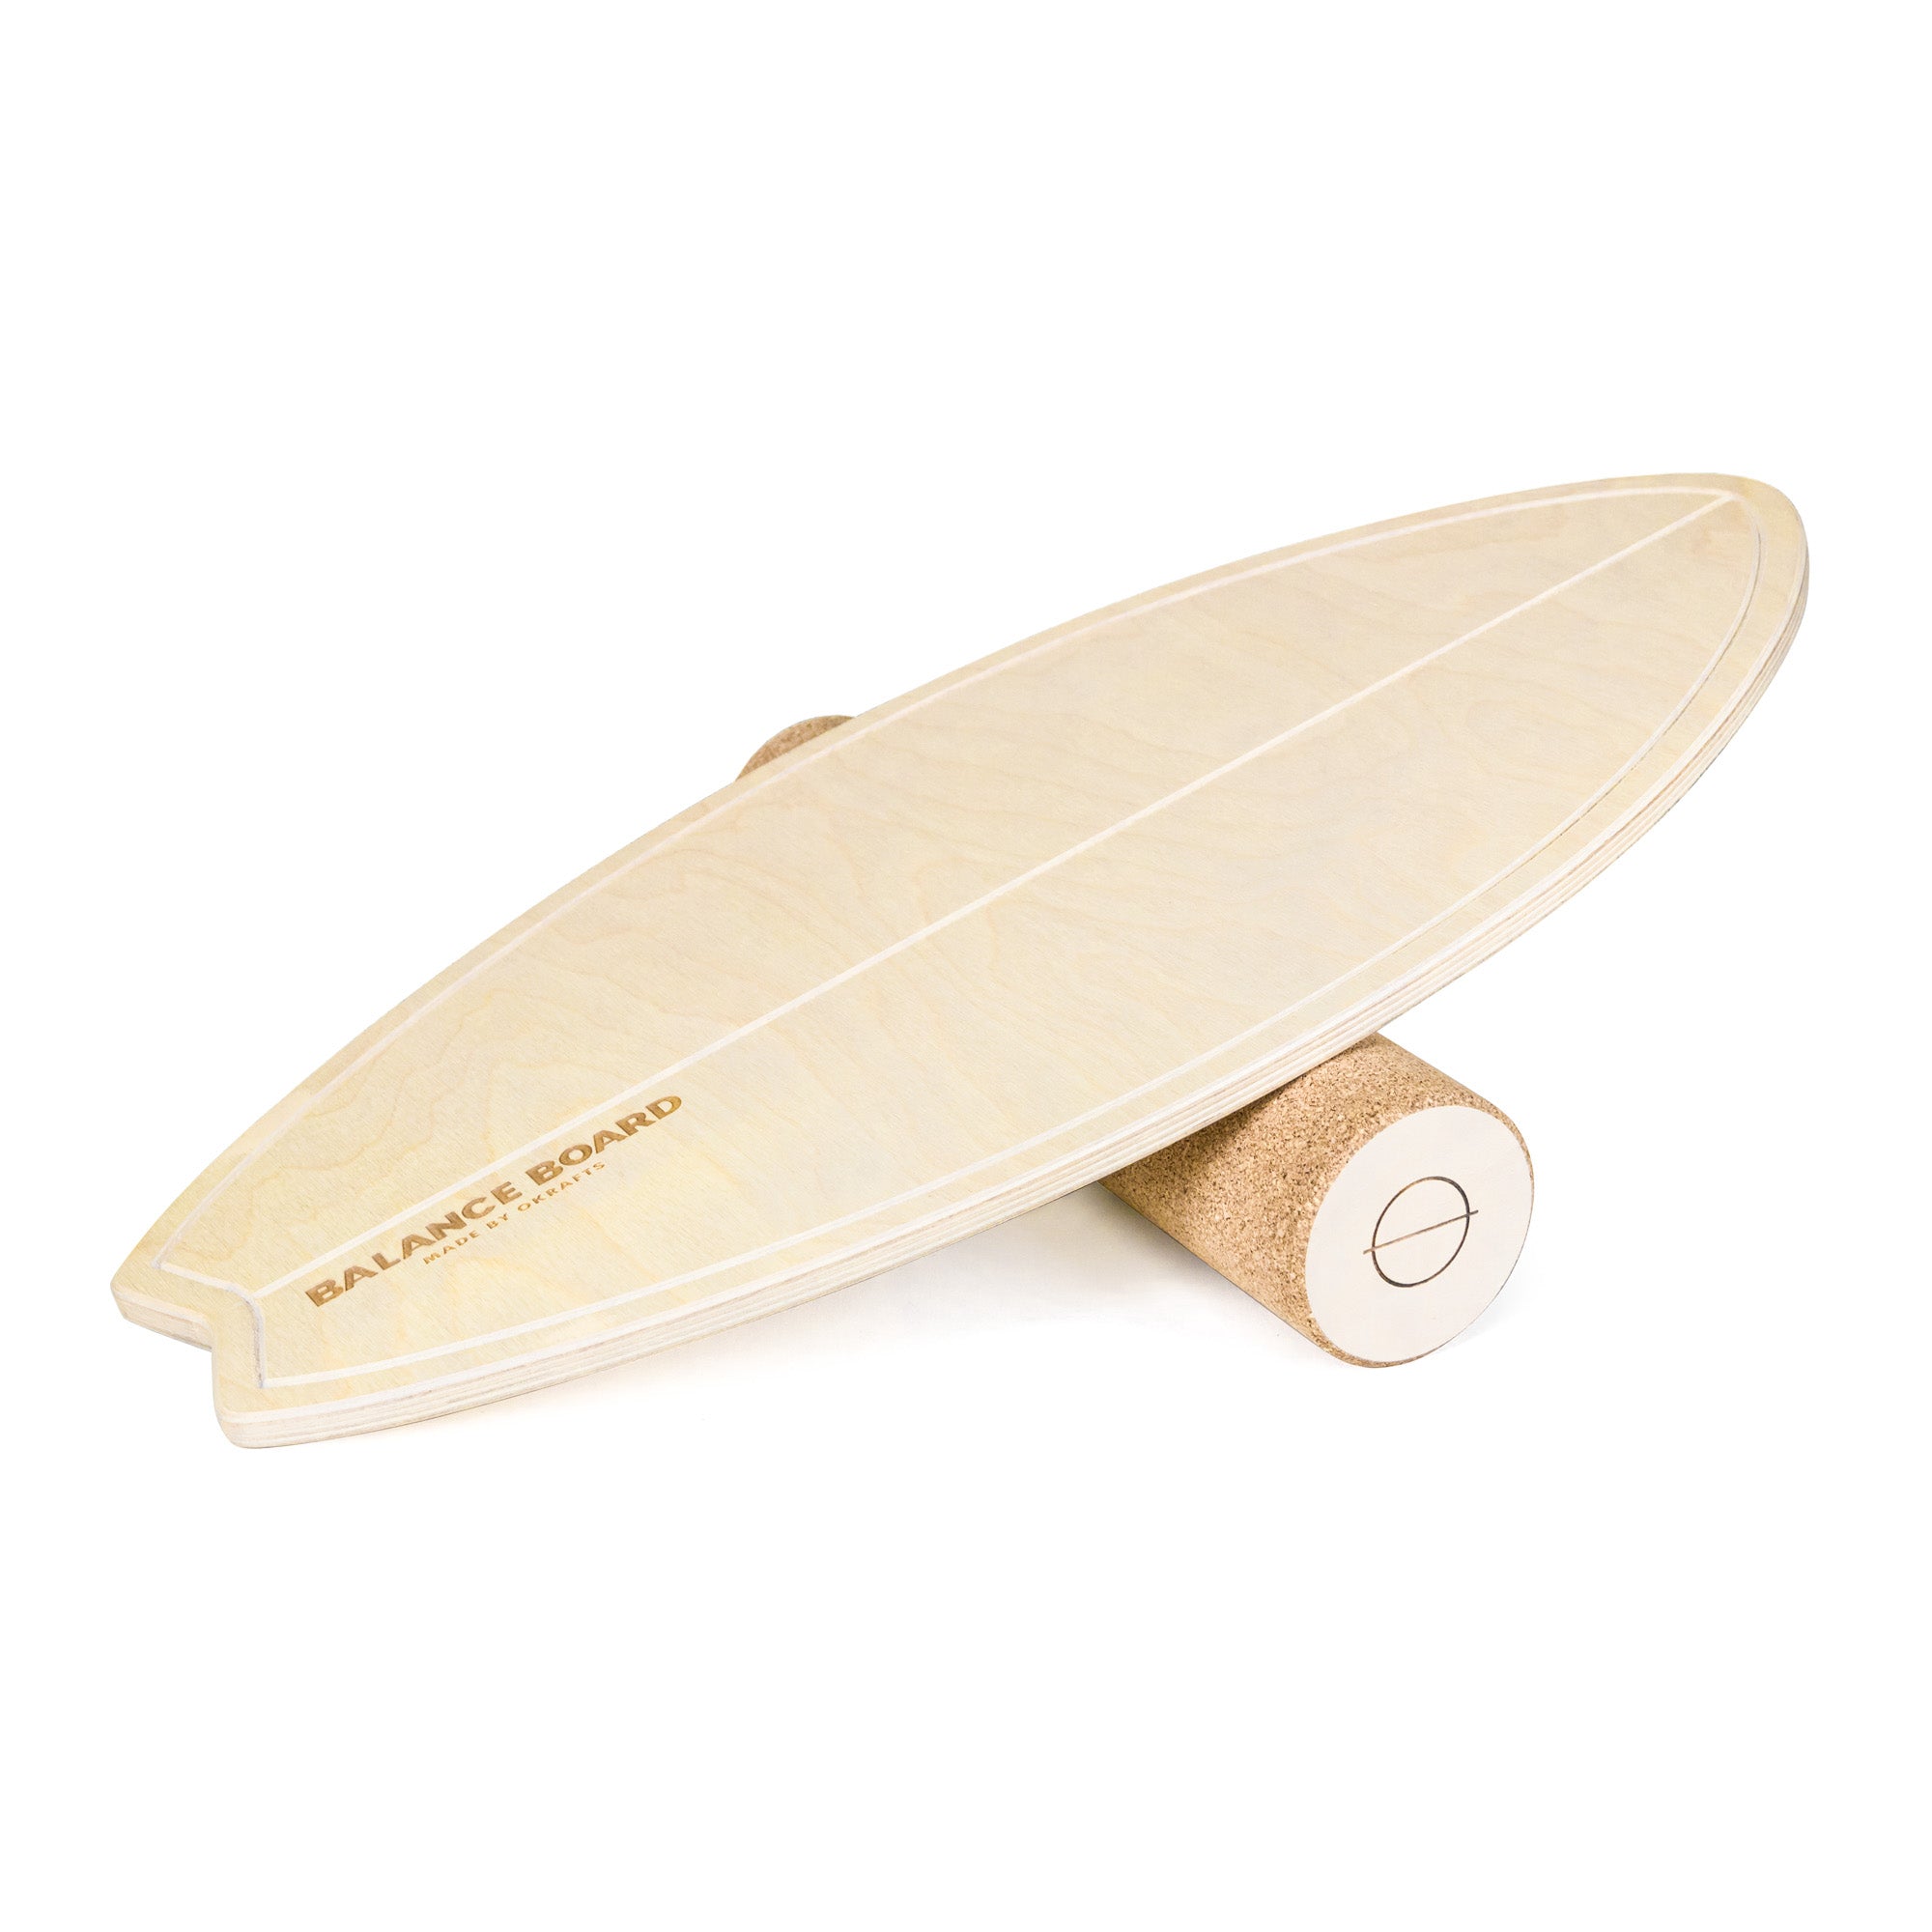 Simple Surfer Balance Board – OKRAFTS